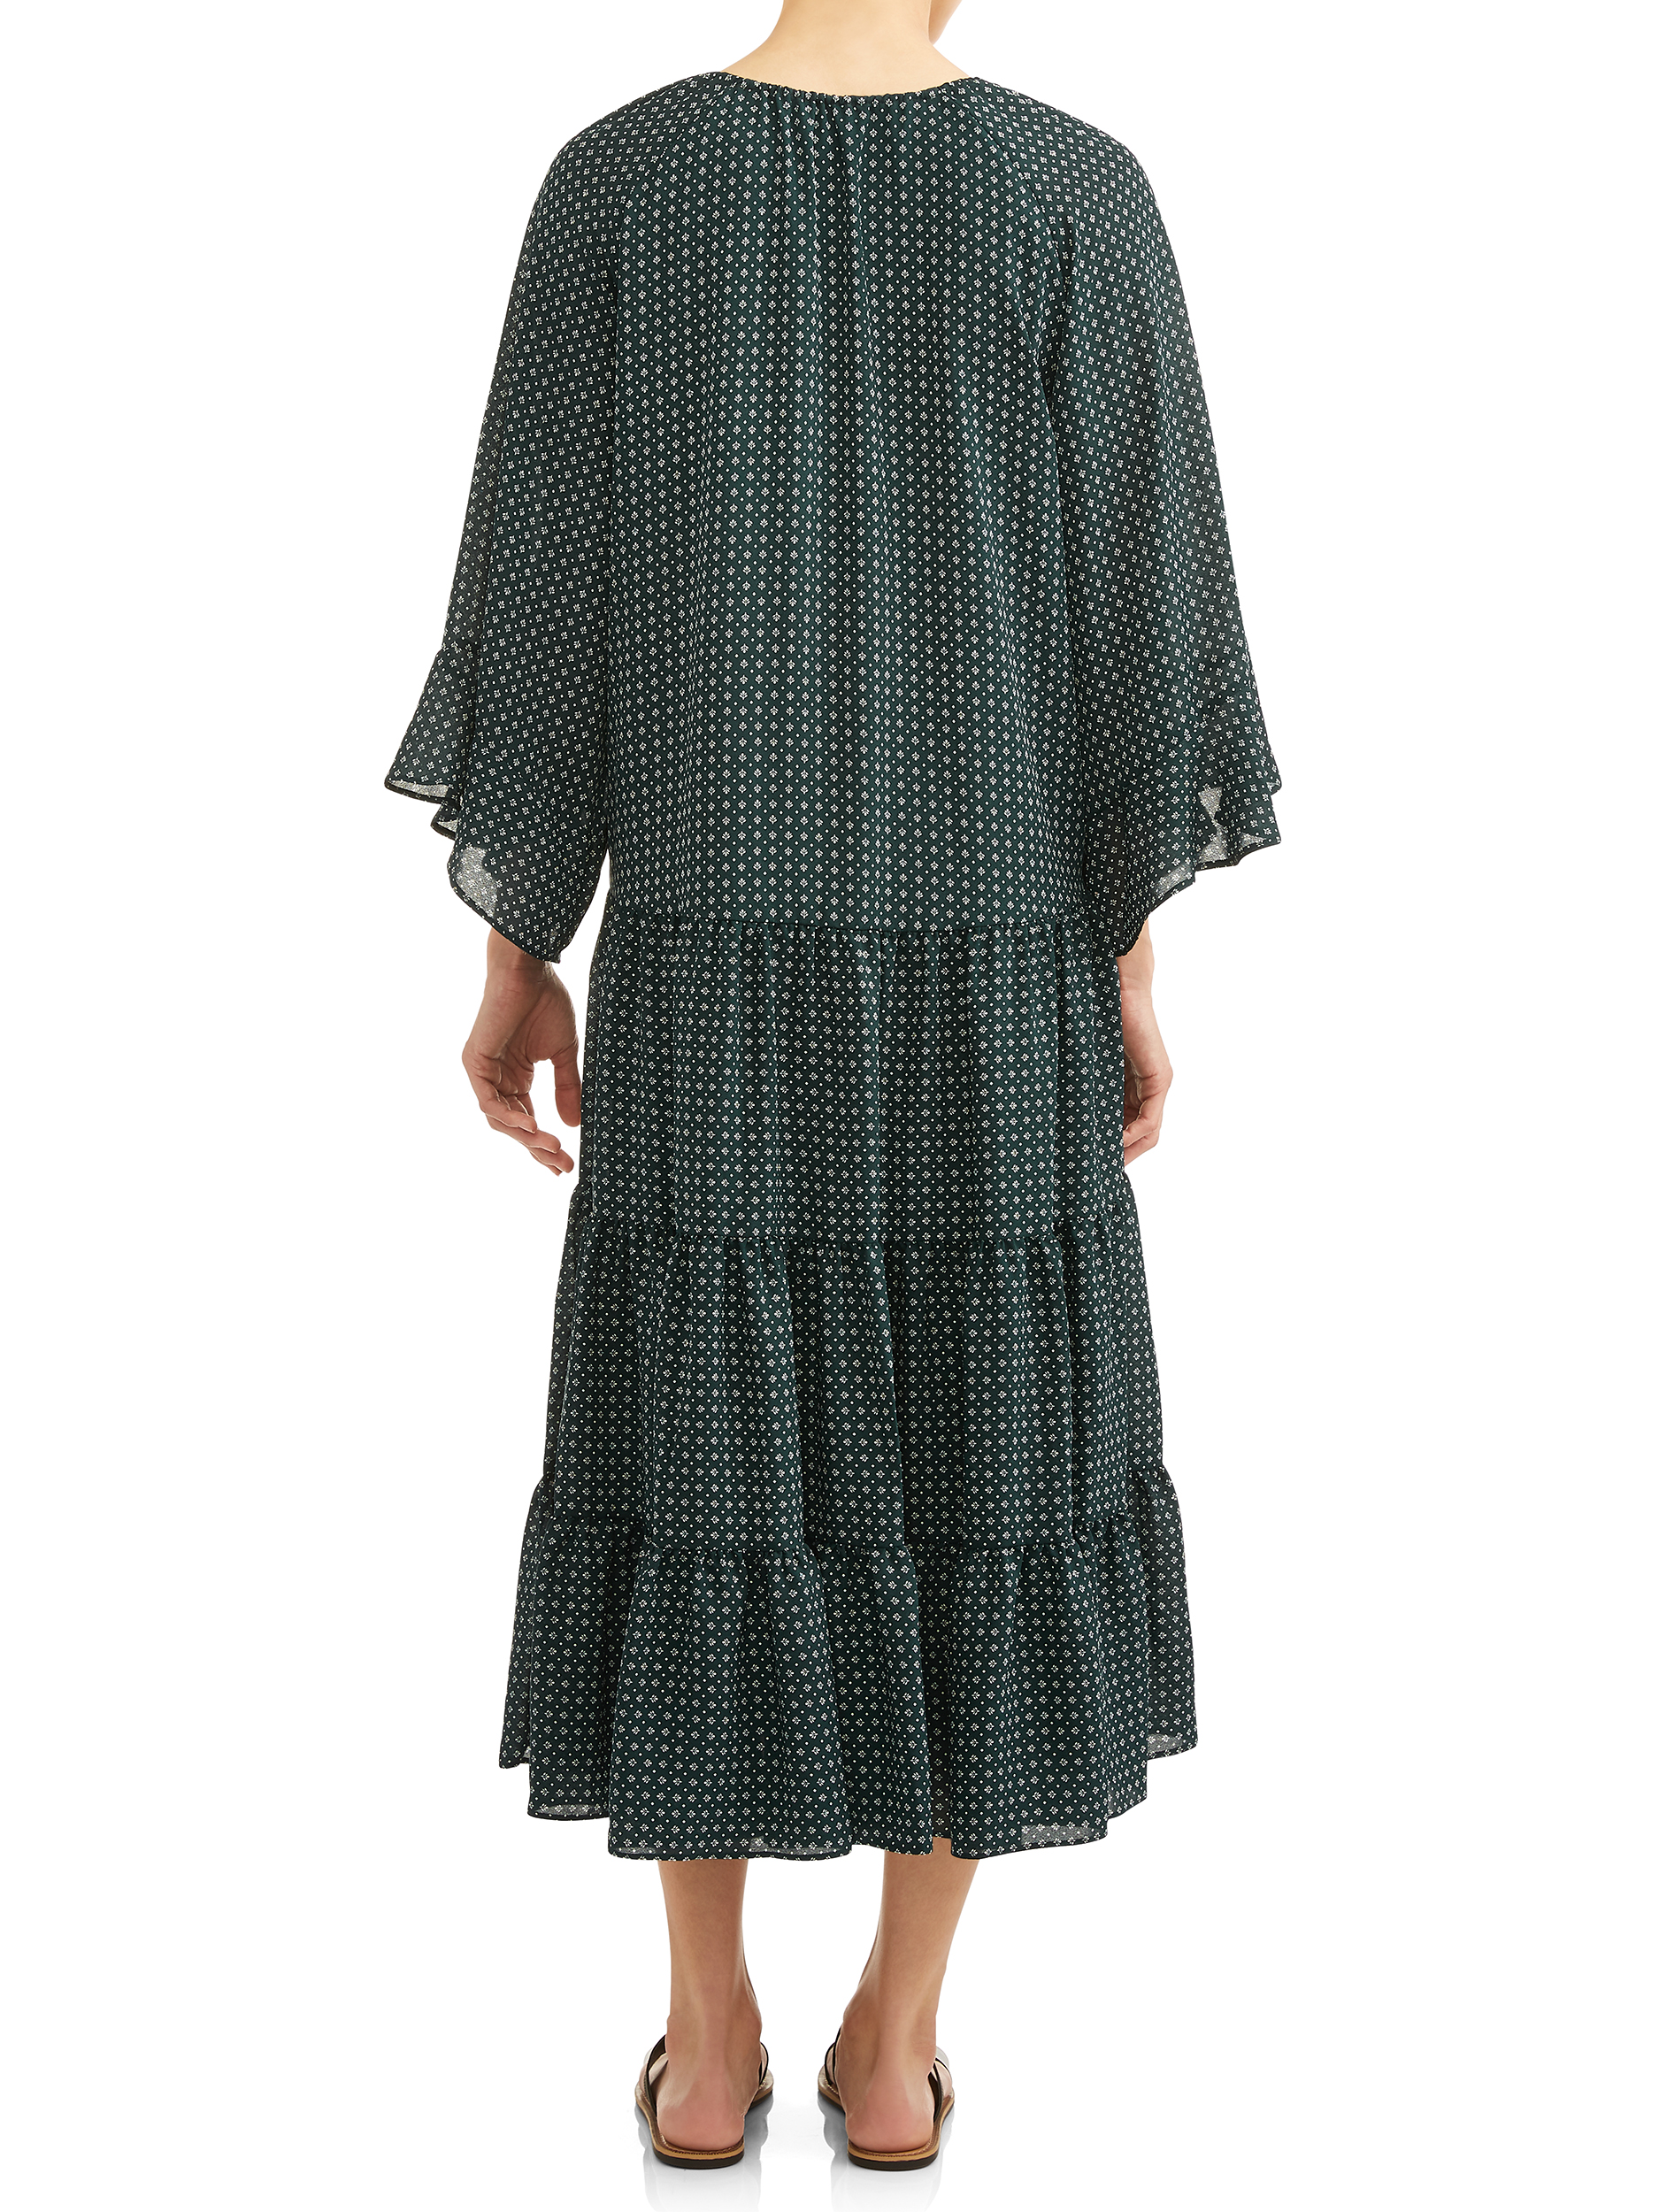 Women's Candice Tiered Ruffle Bell Cuff Dress - image 2 of 3